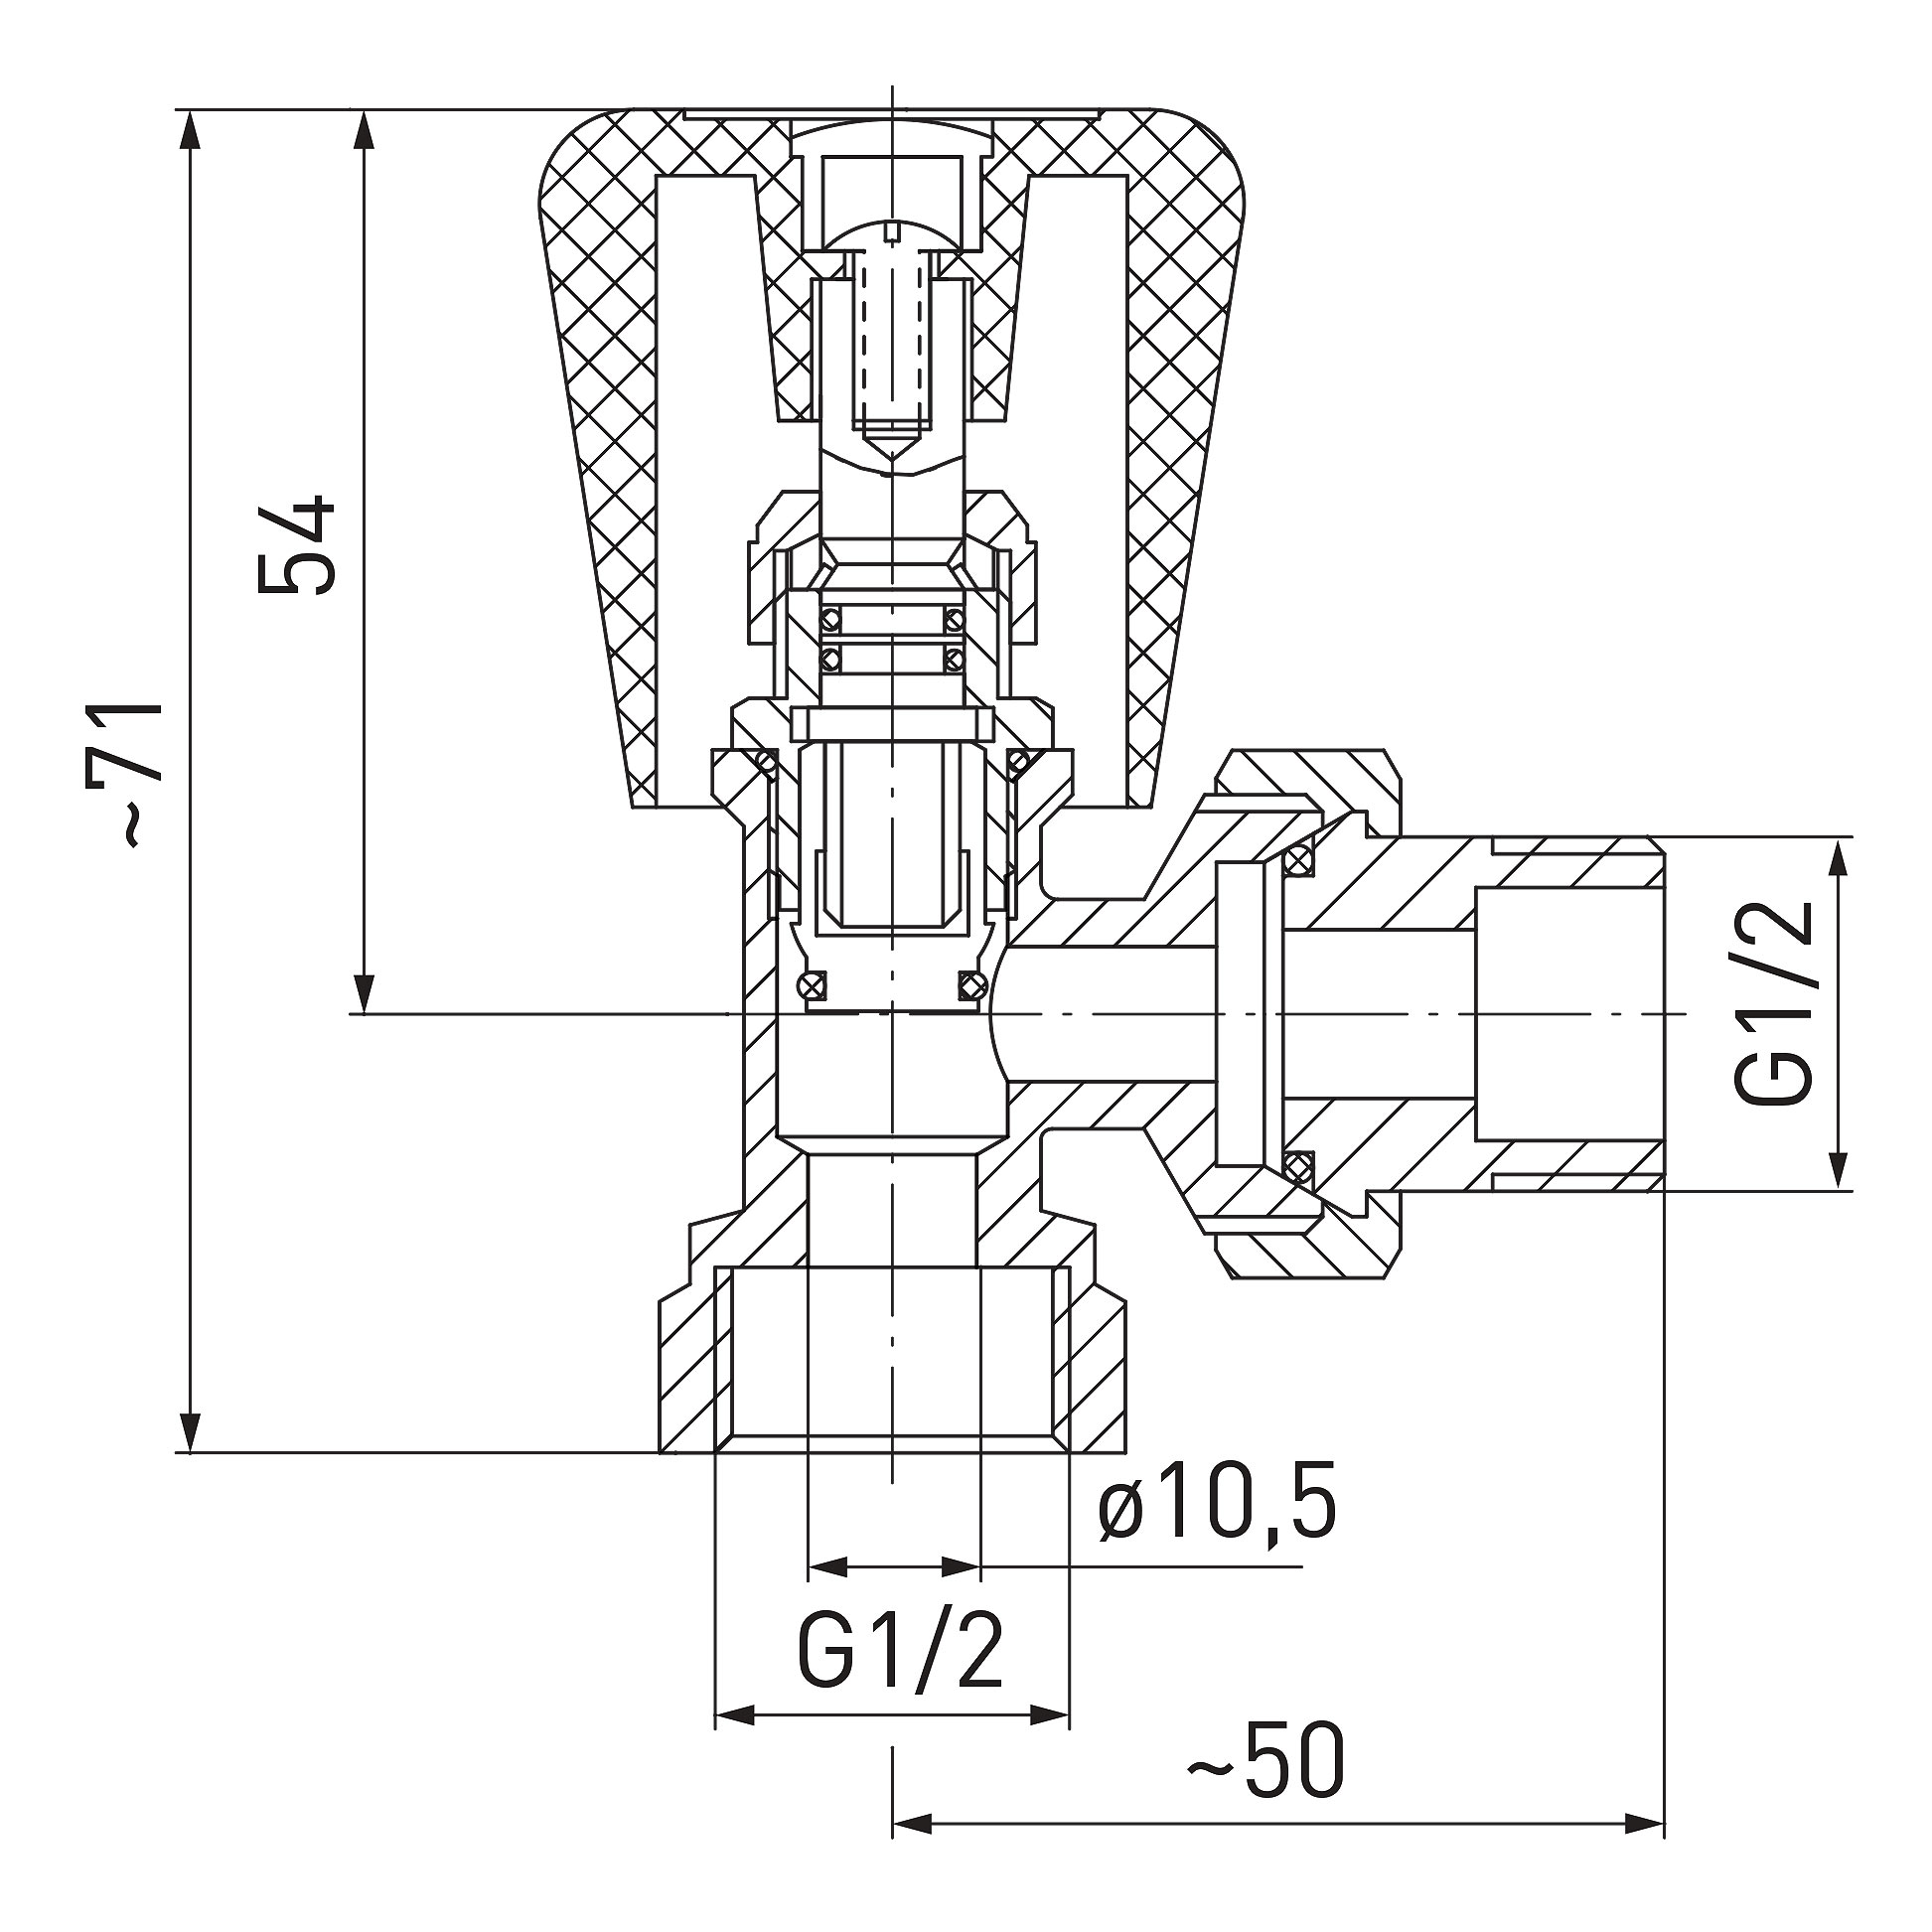 1/2” angle radiator valve with gland